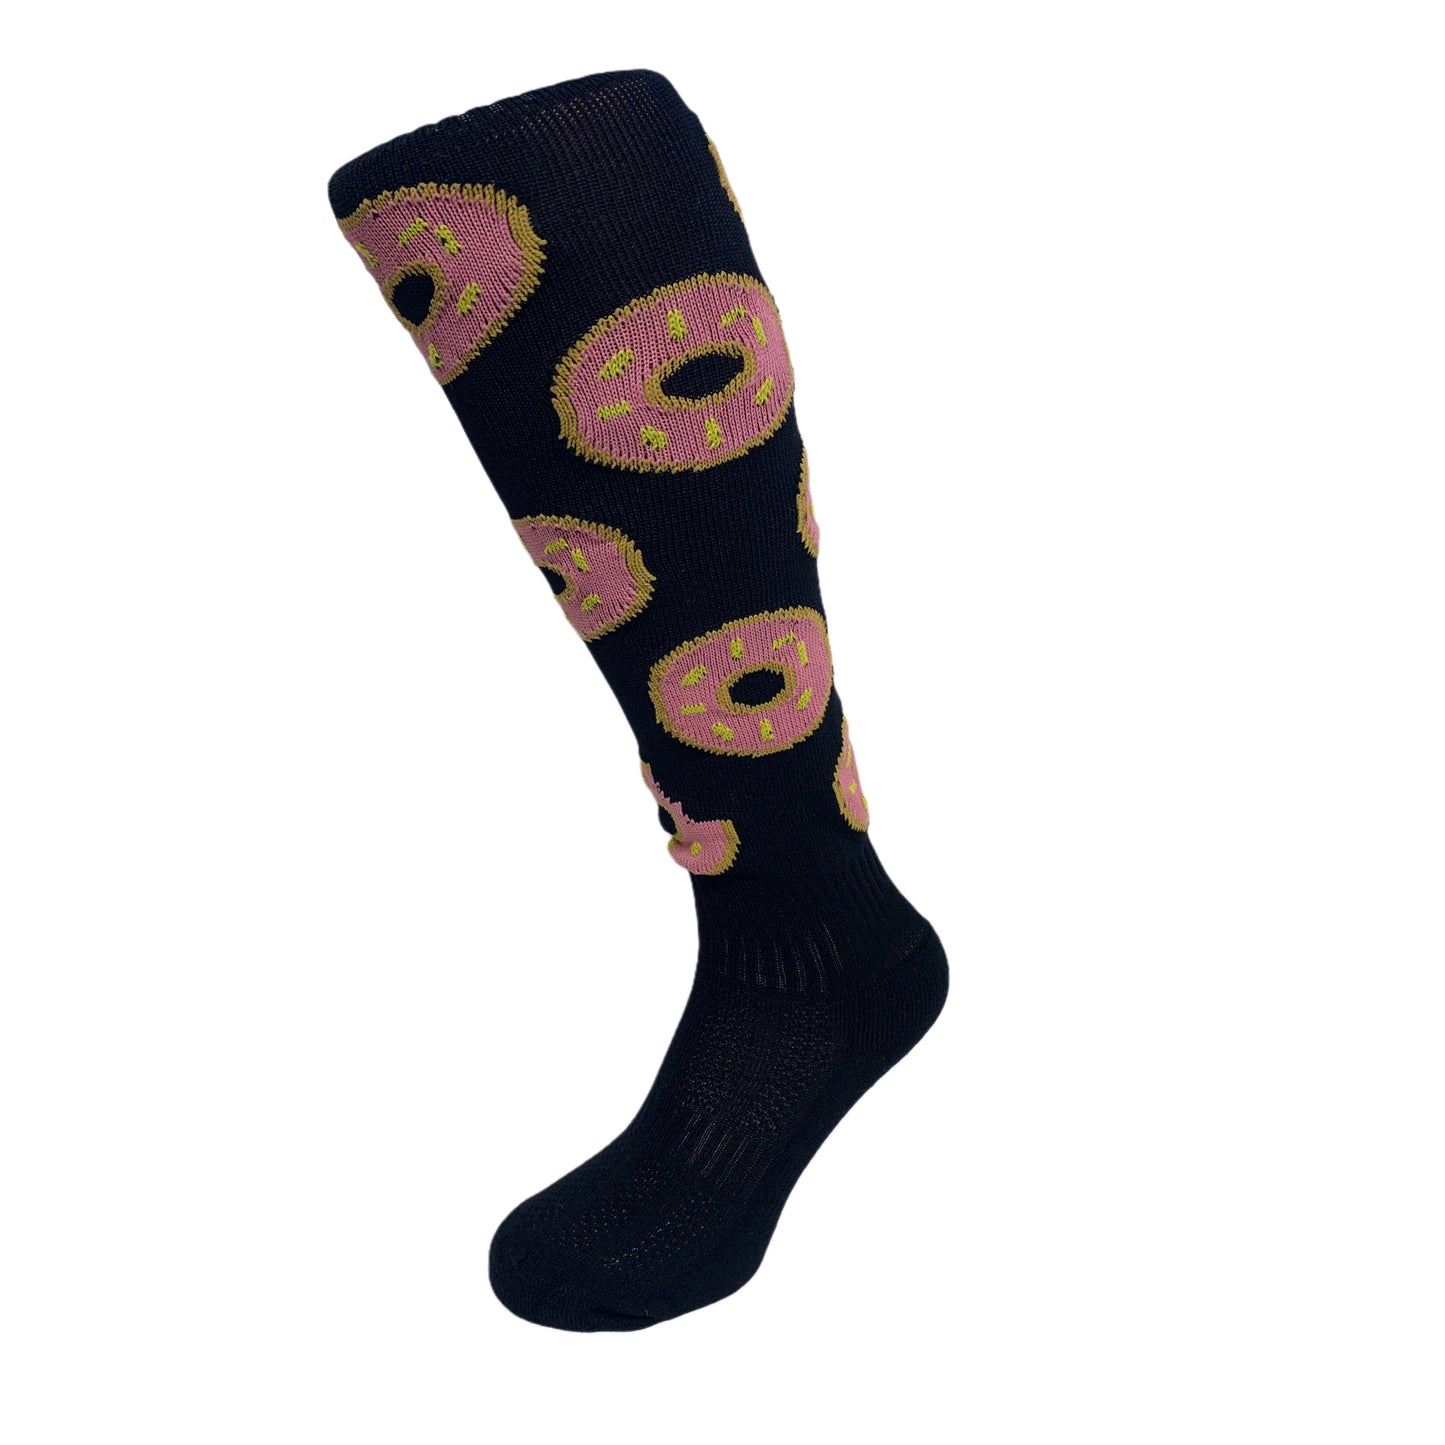 Premium Deadlift Socks (Doughnuts - Black)